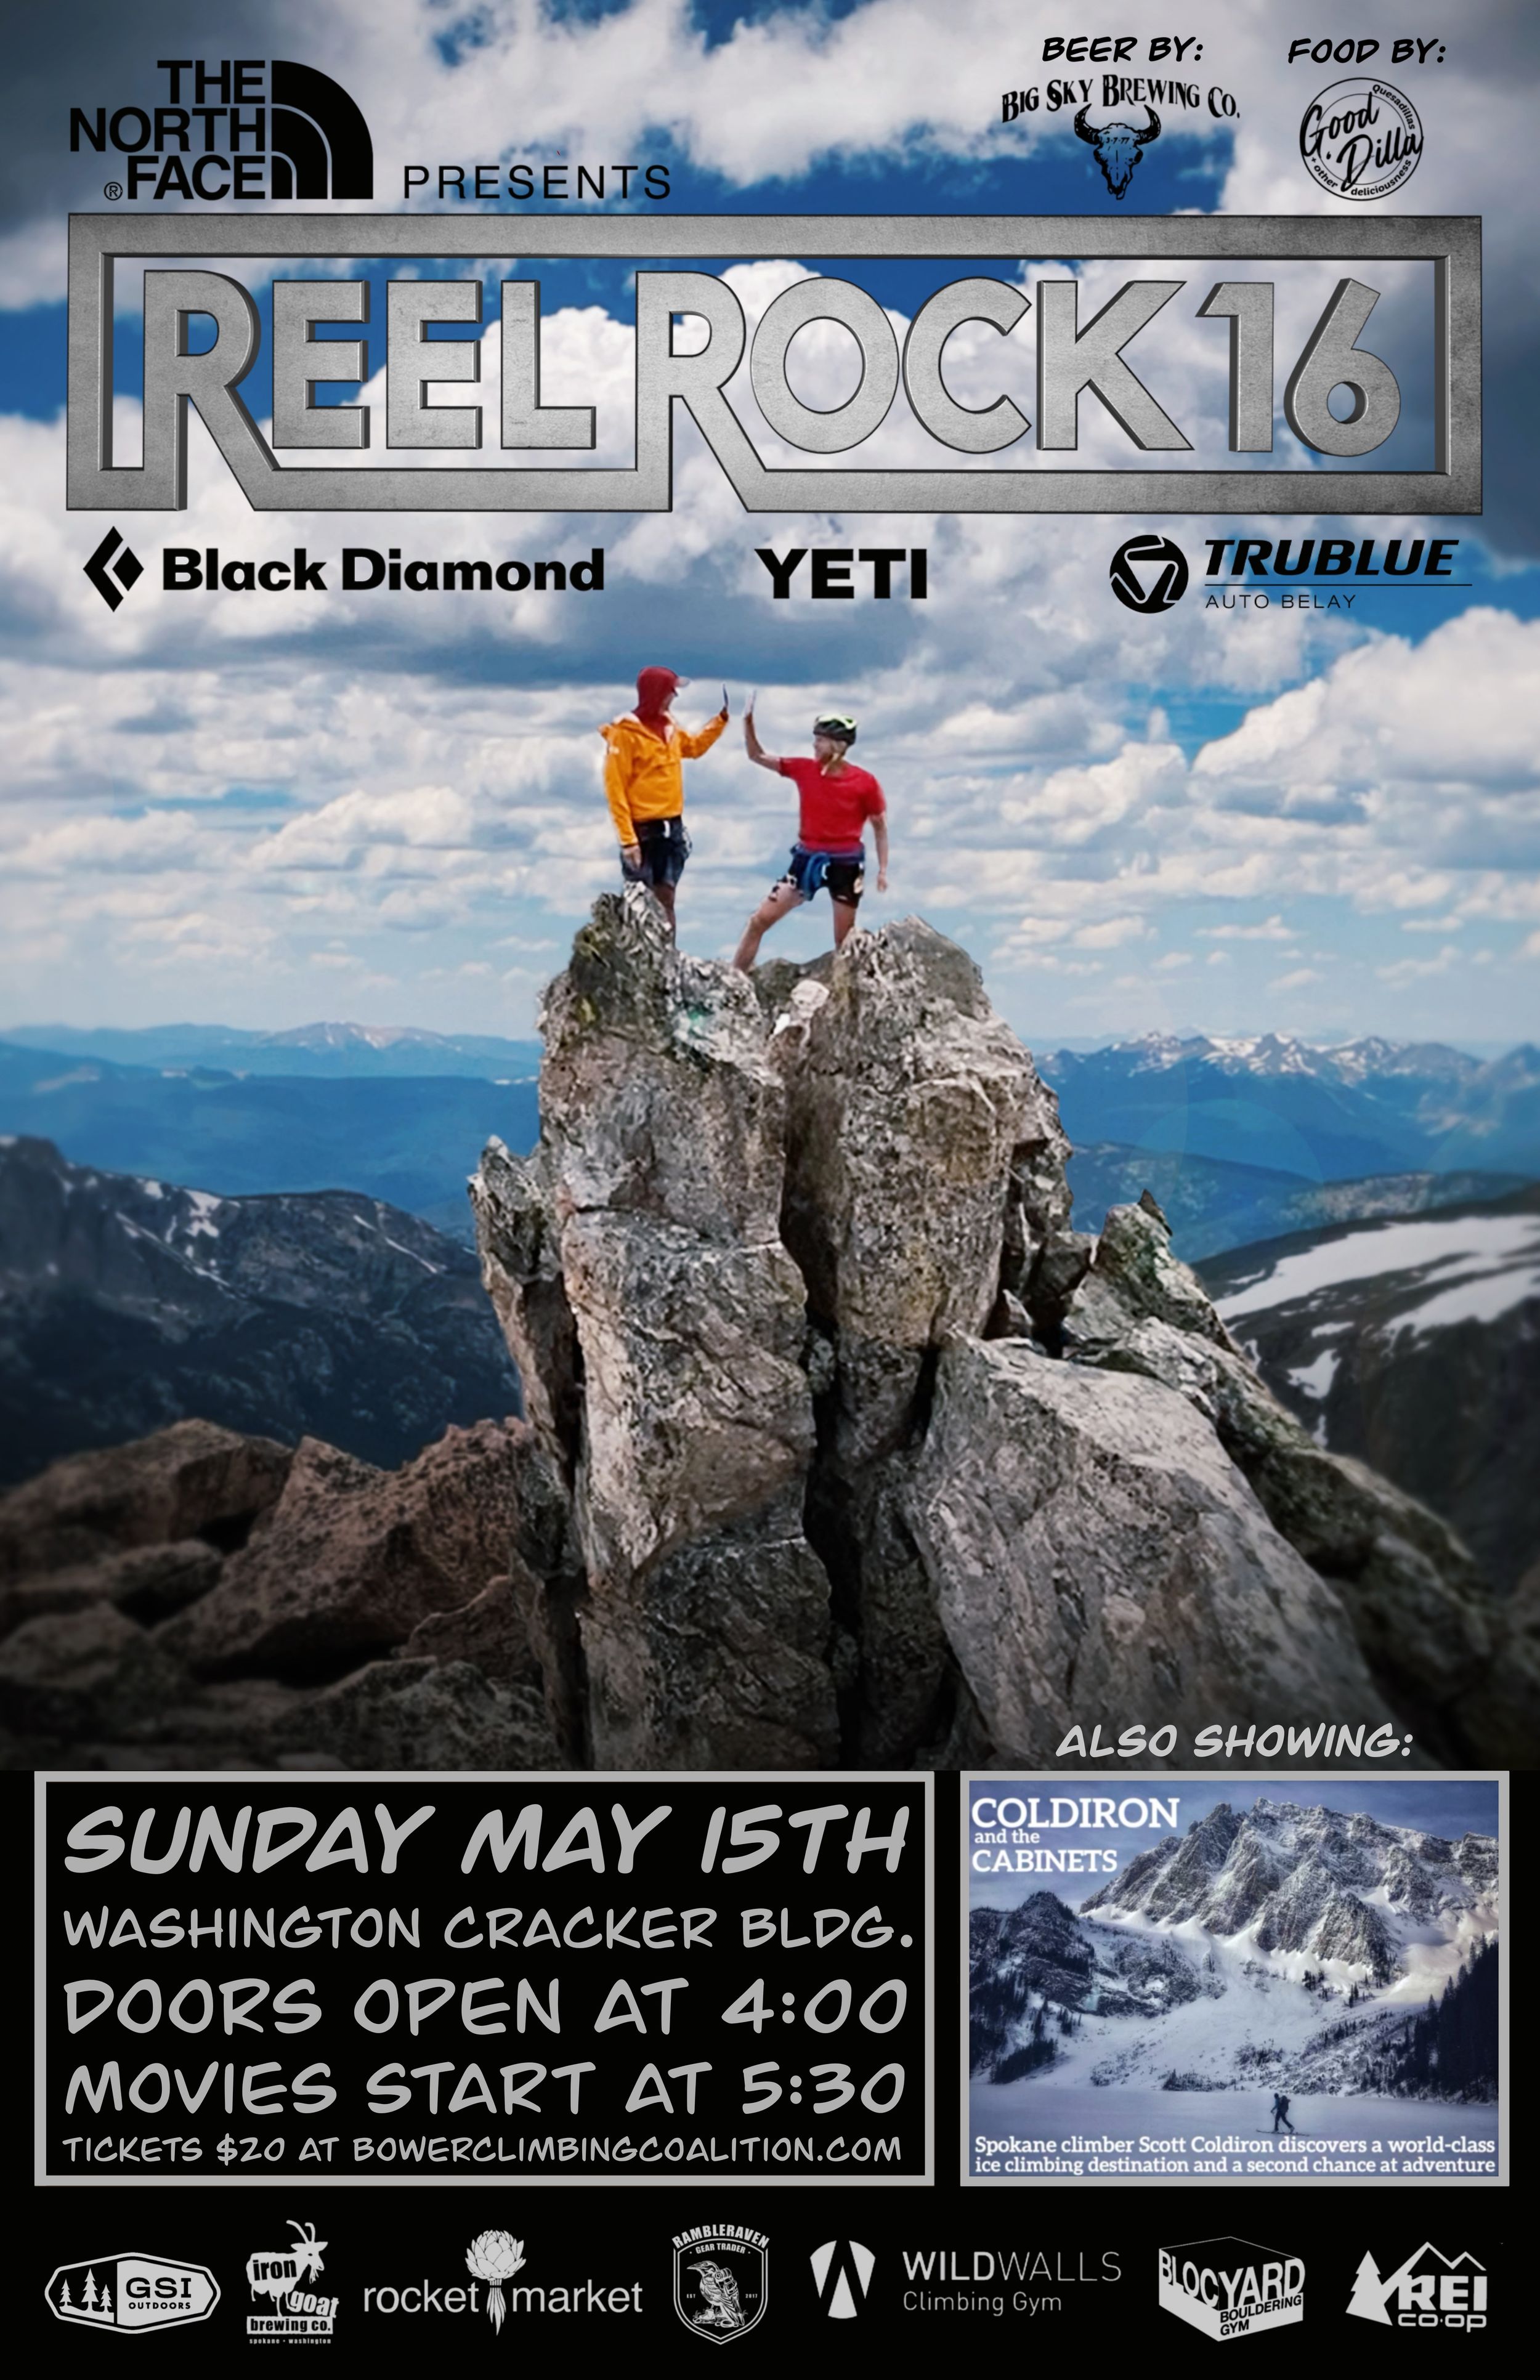 Reel Rock climbing film festival returns to Spokane after more